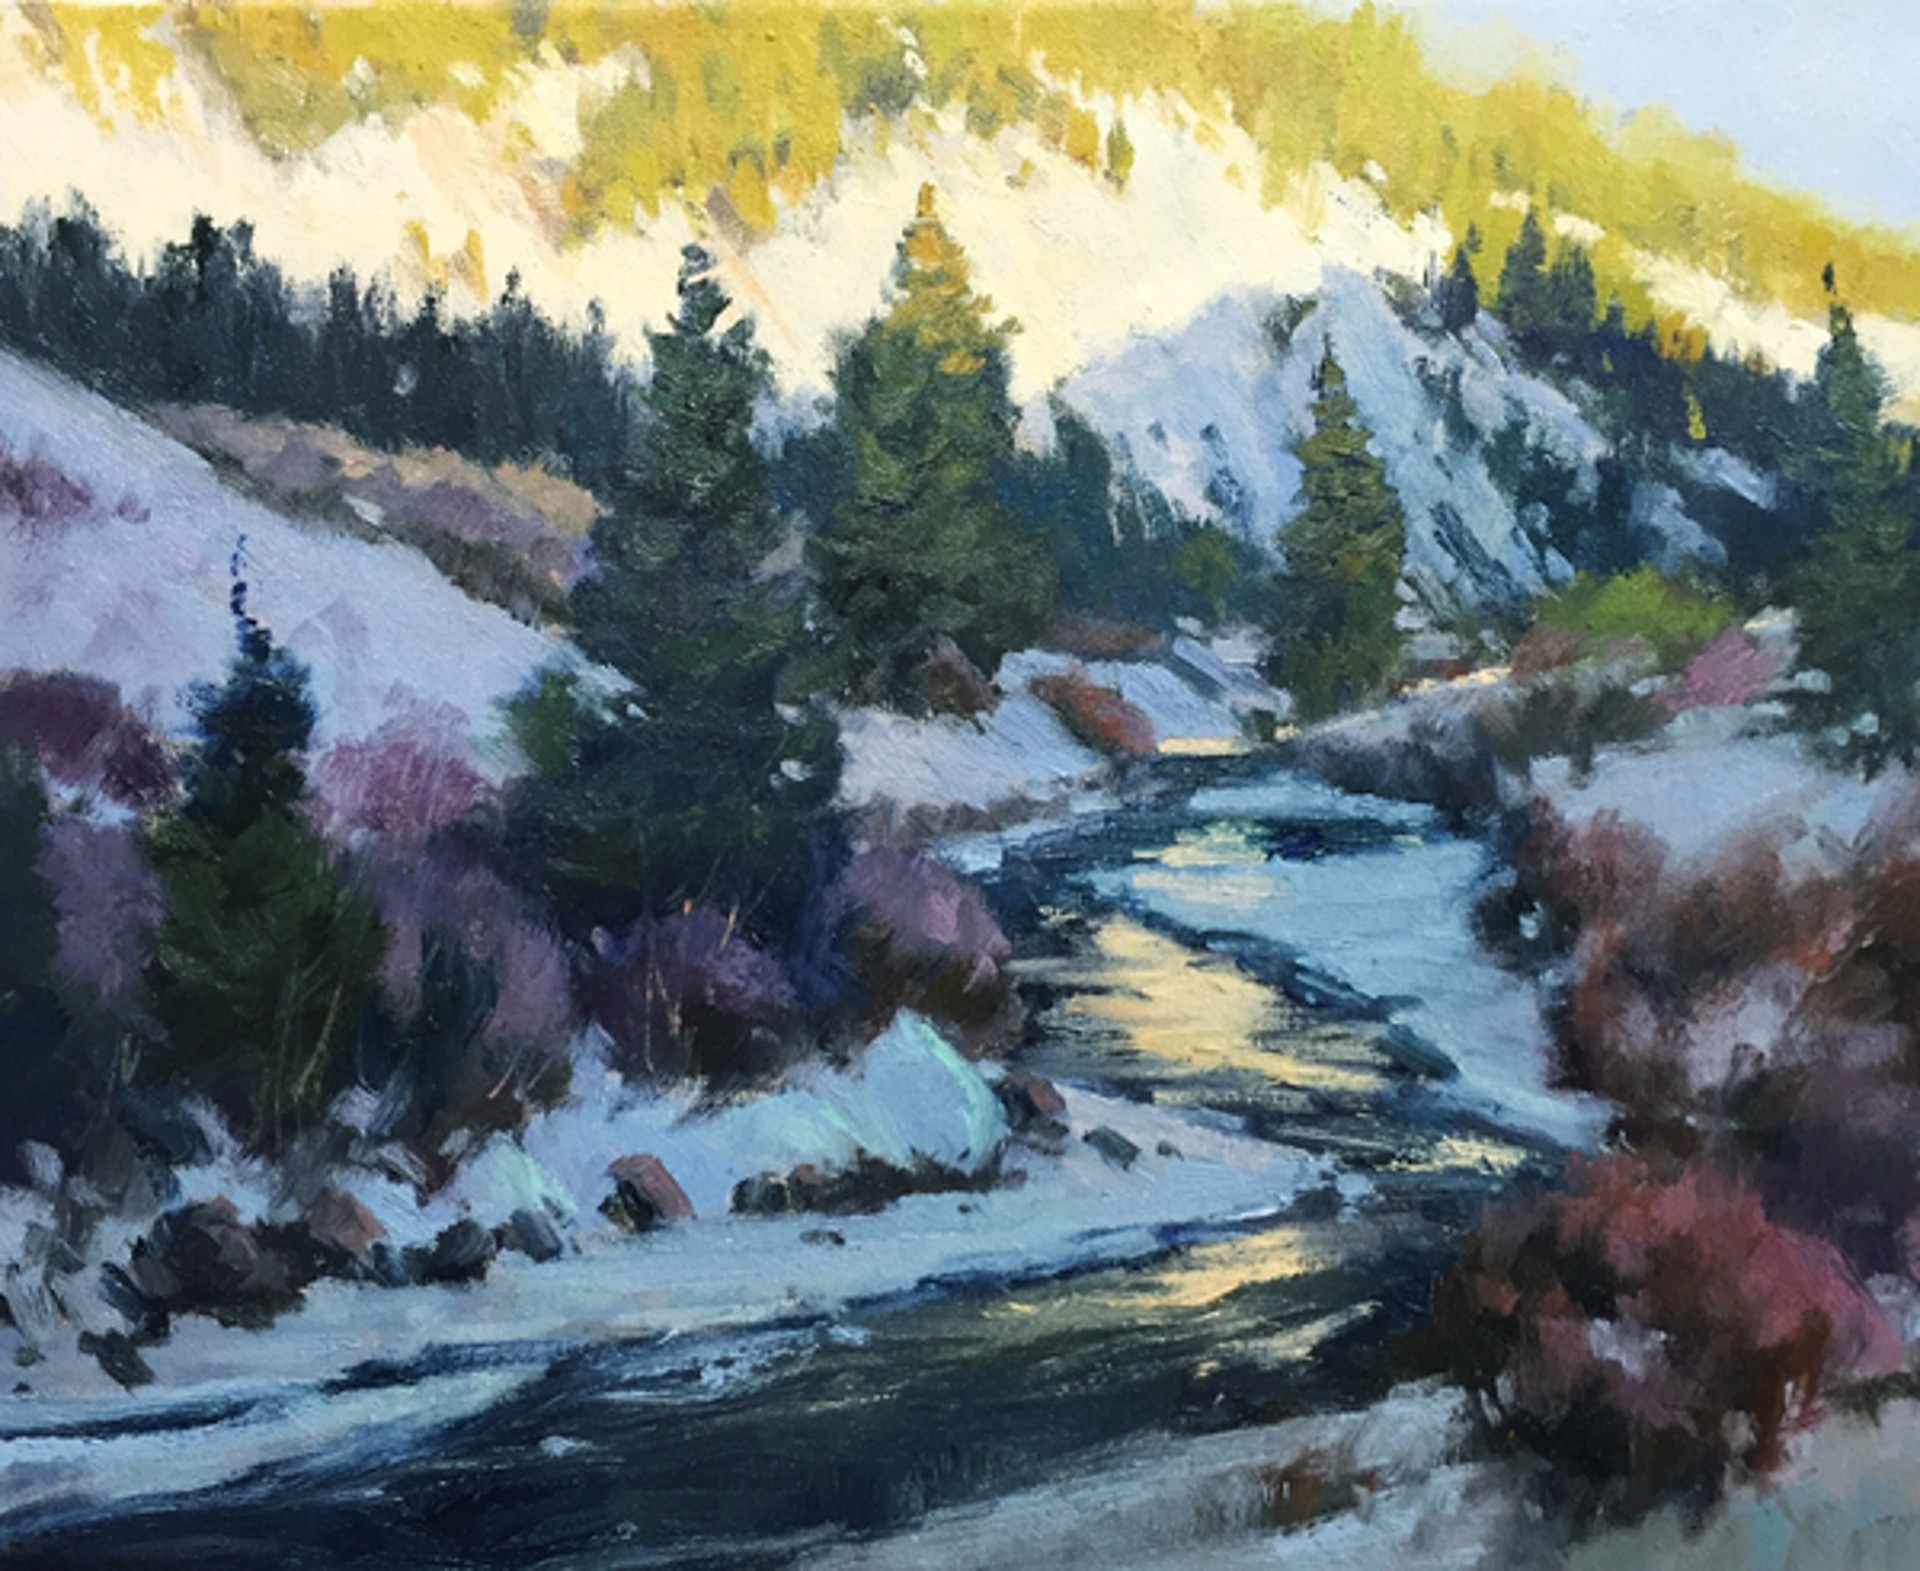 Sunrise On The Creek by Rusty Jones